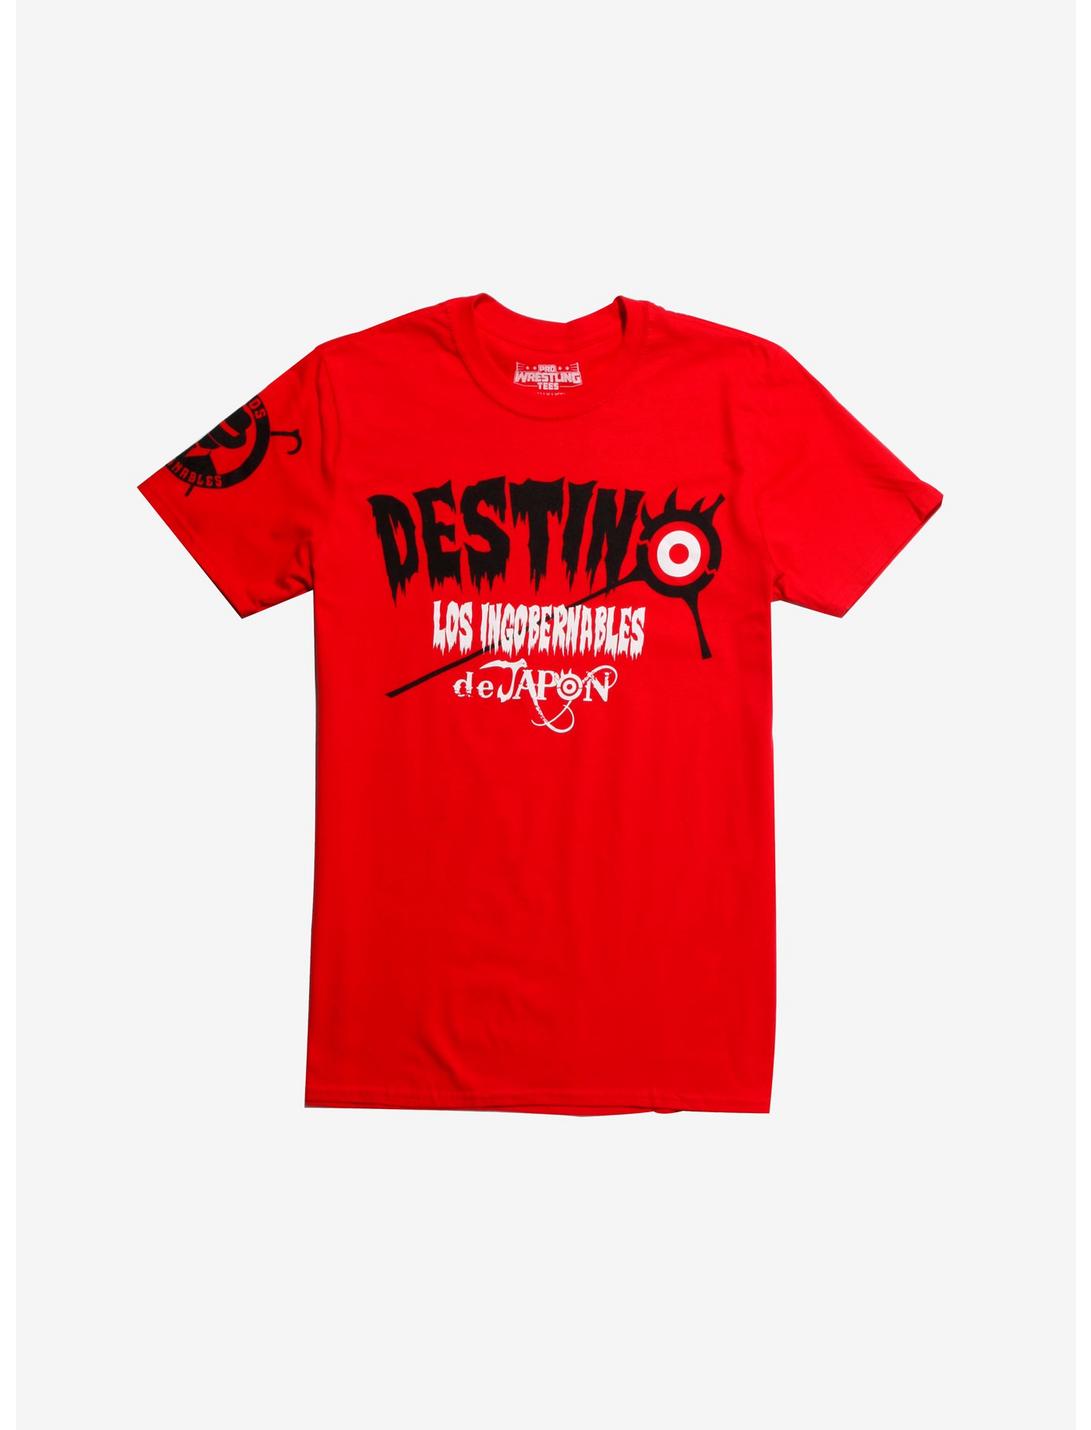 New Japan Pro-Wrestling Destino Los Ingobernables De Japon T-Shirt, RED, hi-res